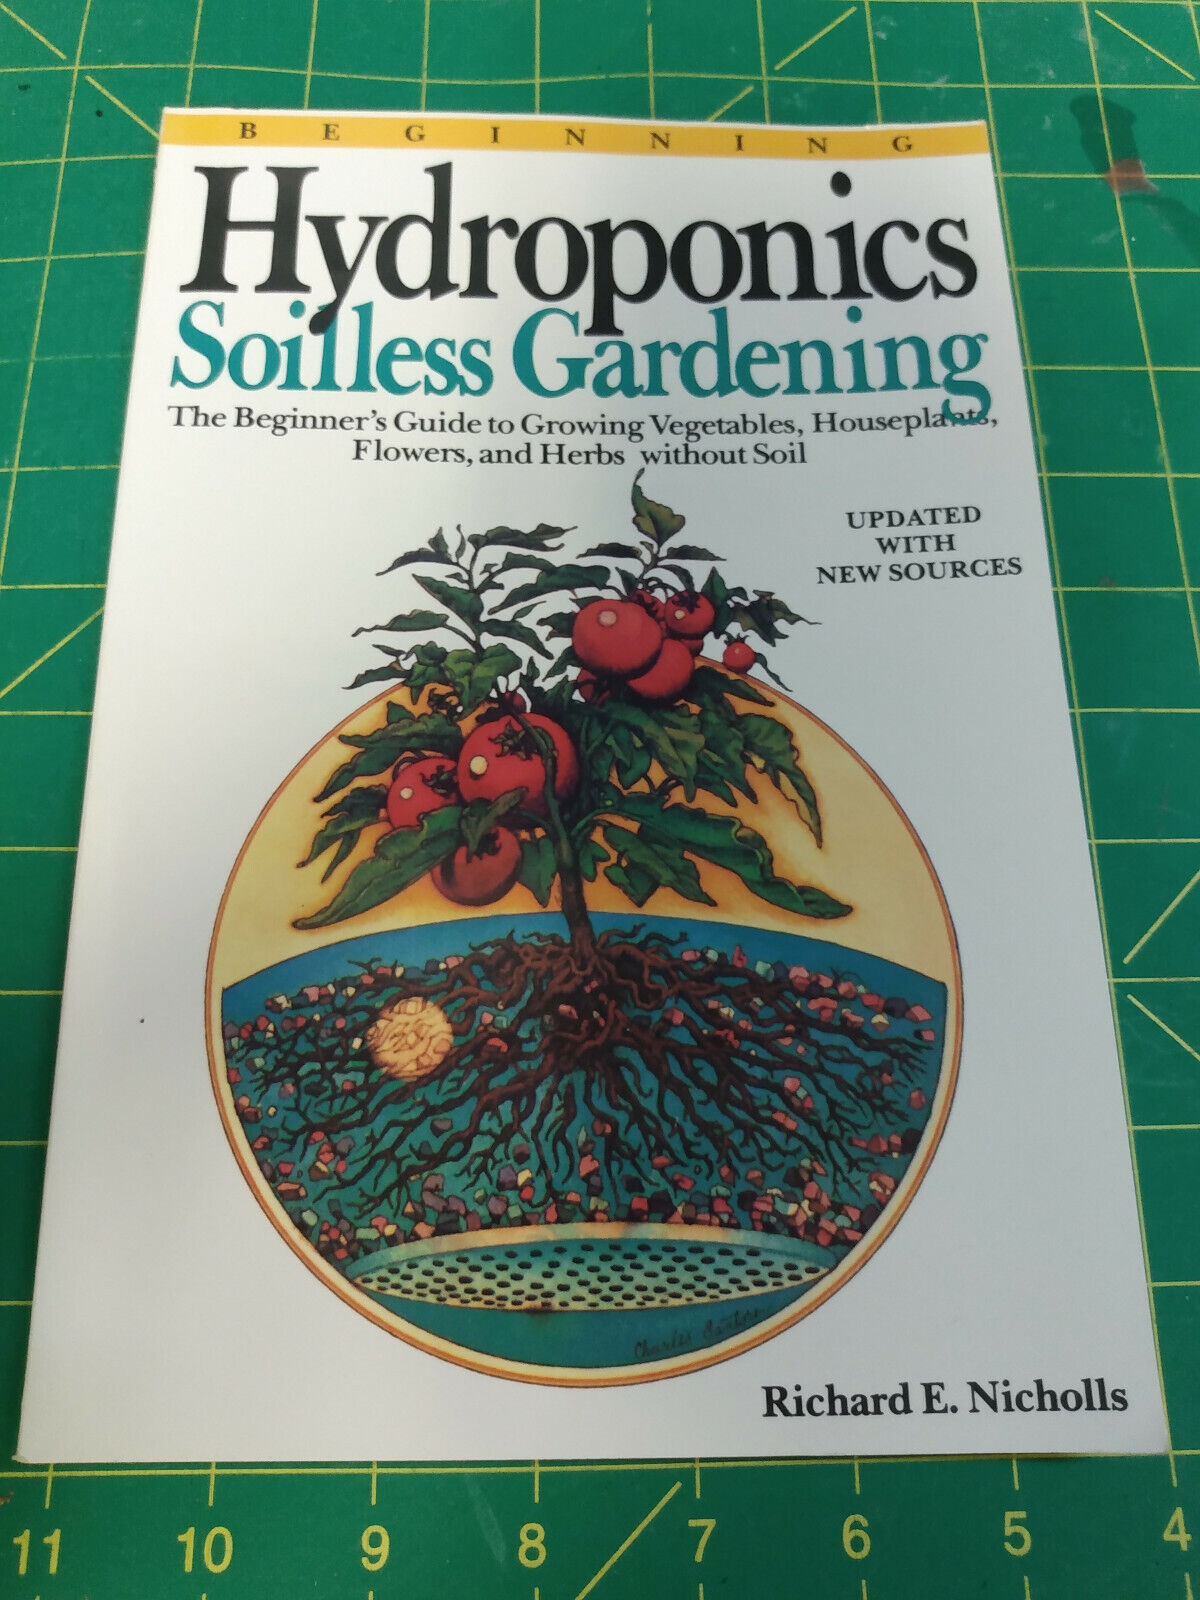 Hydroponics: Soilless Gardening by Richard E. Nicholls (Softcover)